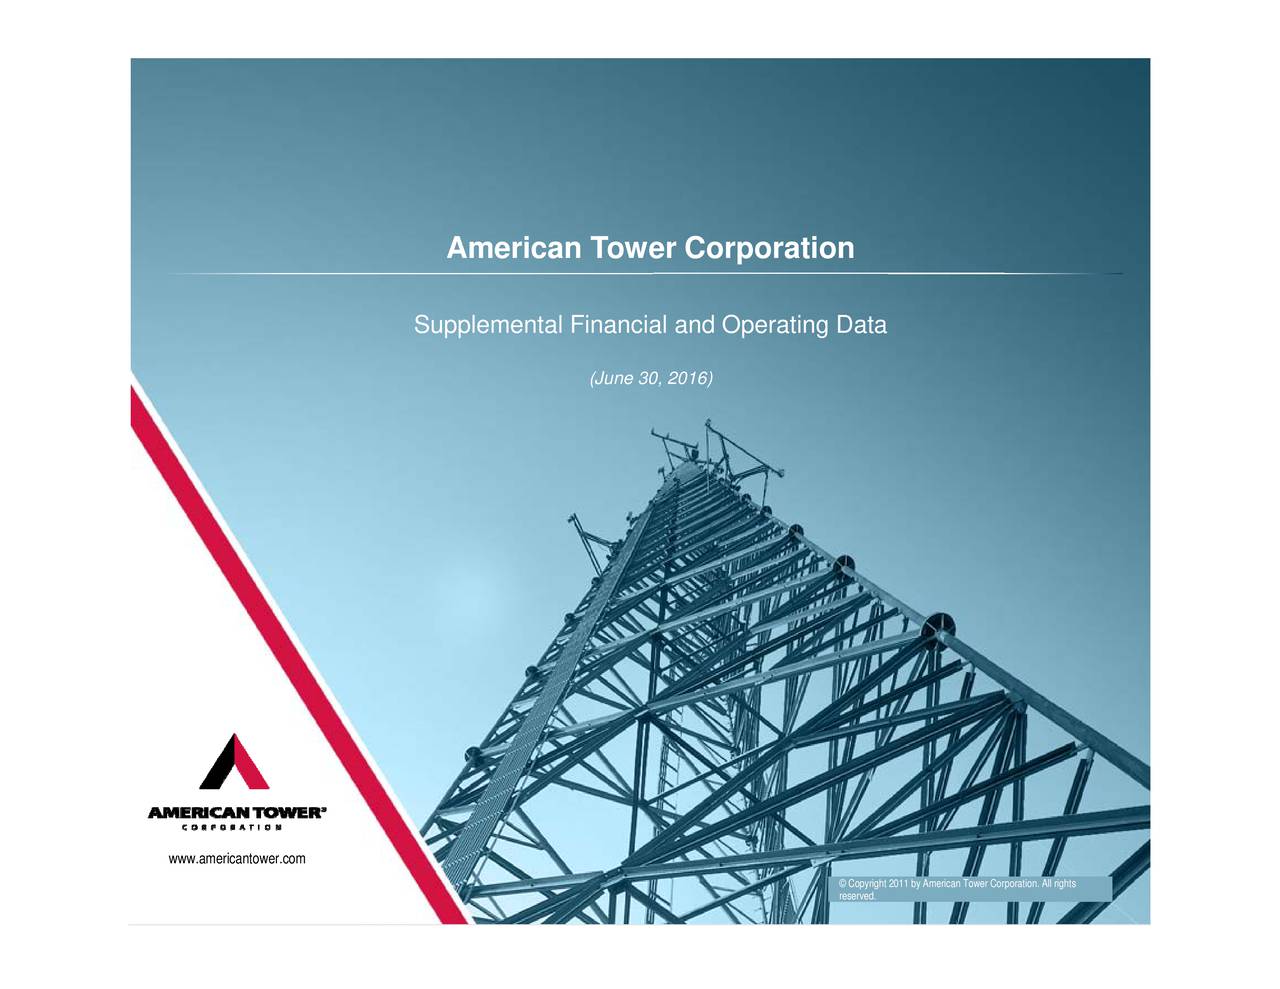 american tower company